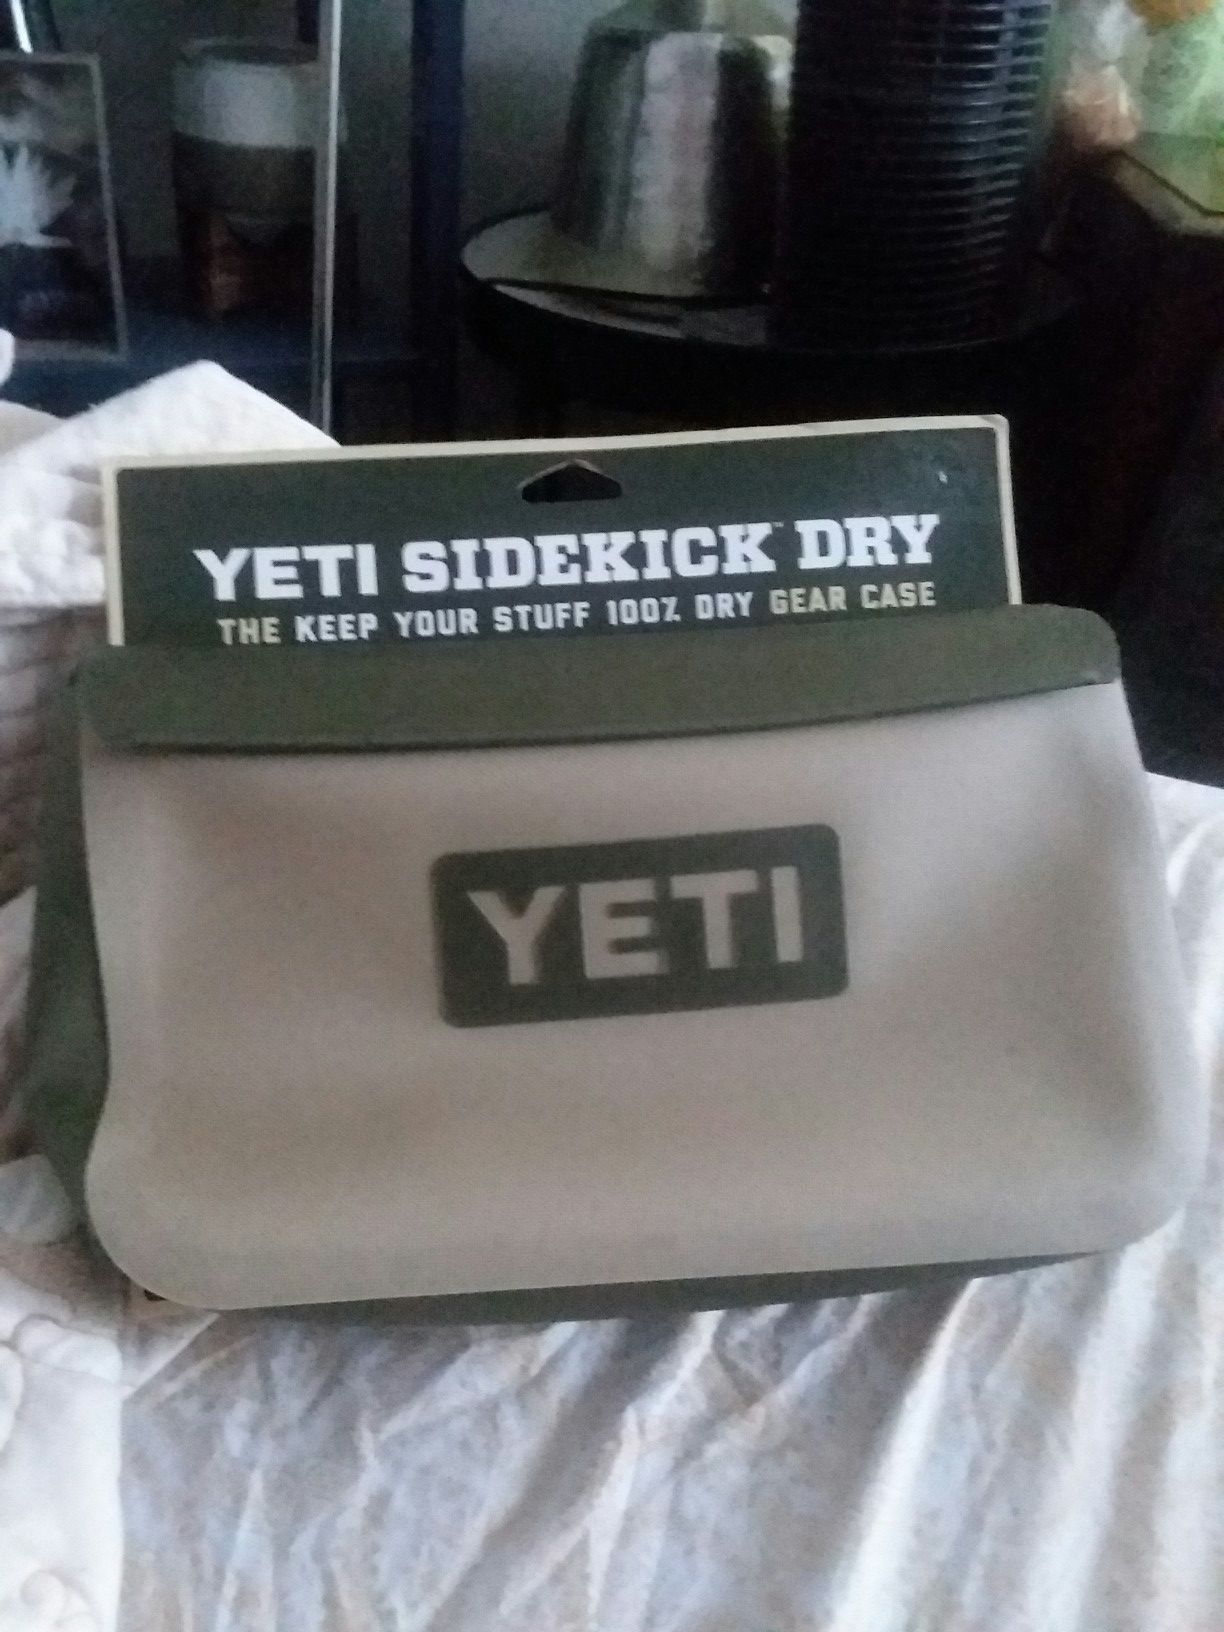 Yeti sidekick dry bag for Sale in Portsmouth, VA - OfferUp